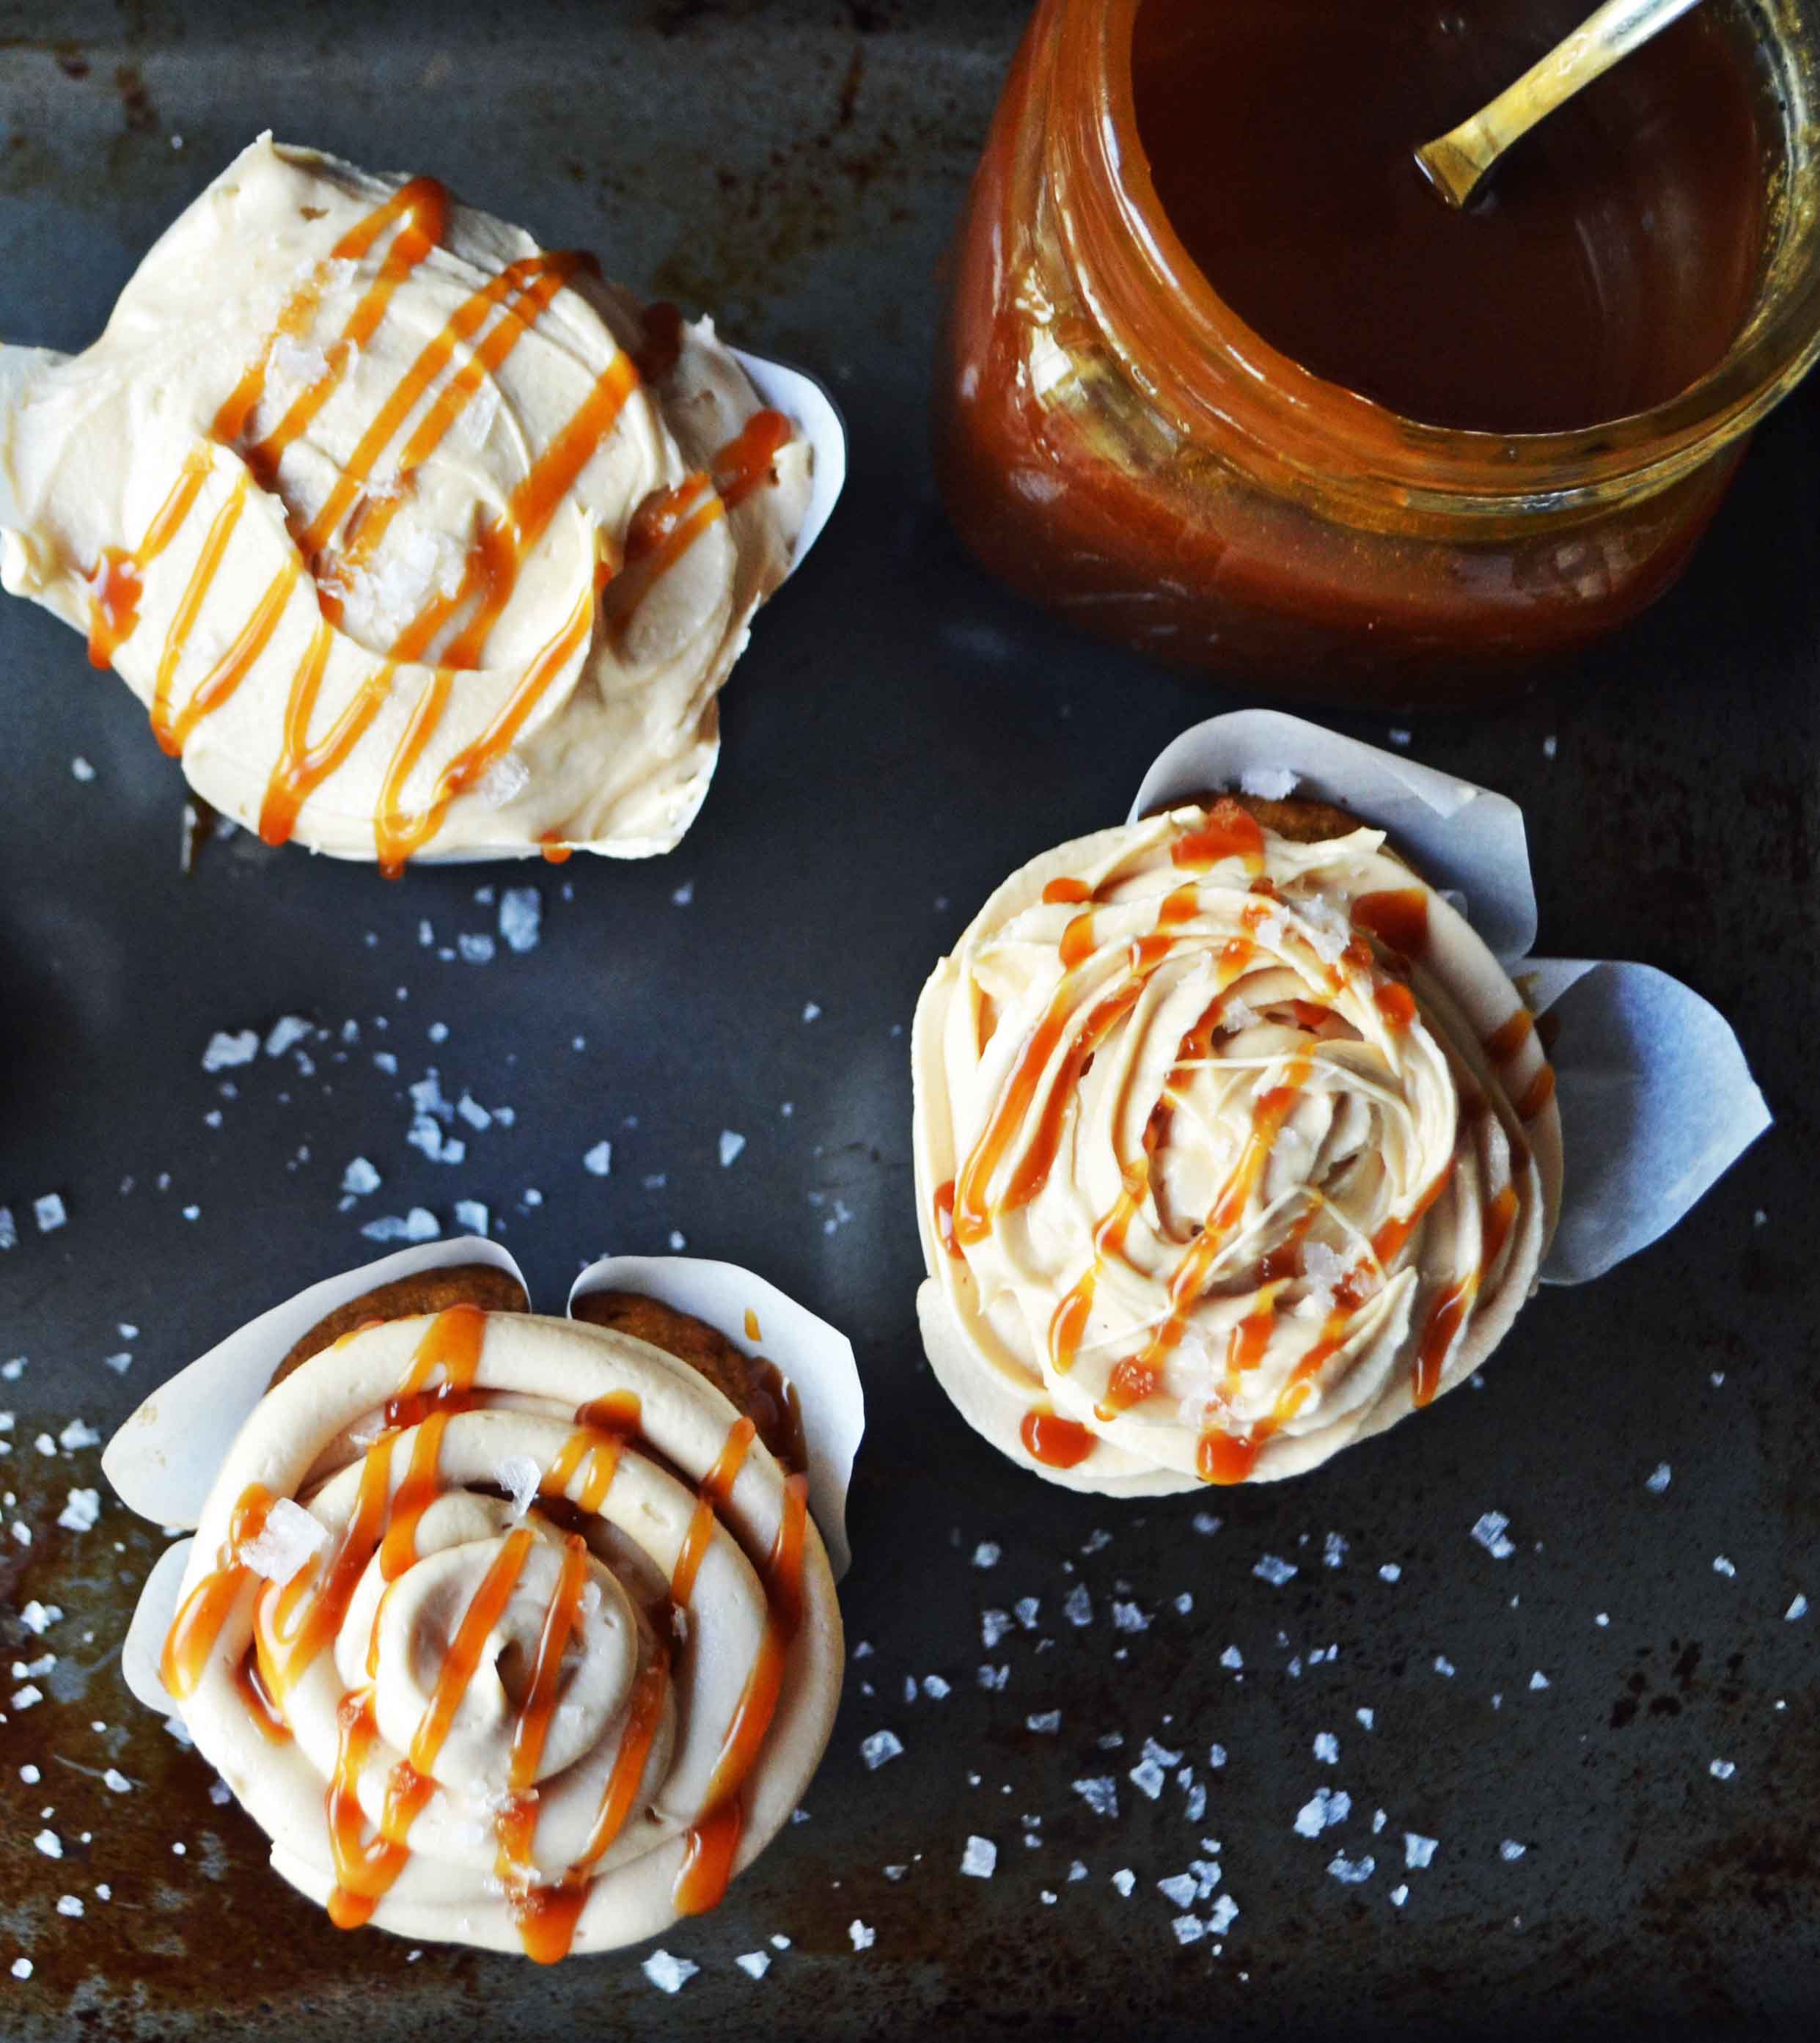 Pumpkin Cupcakes with Salted Caramel Frosting by Modern Honey. Homemade, made from scratch salted carmel frosting tops a cinnamon spiced pumpkin cupcake. The perfect Fall dessert! www.modernhoney.com